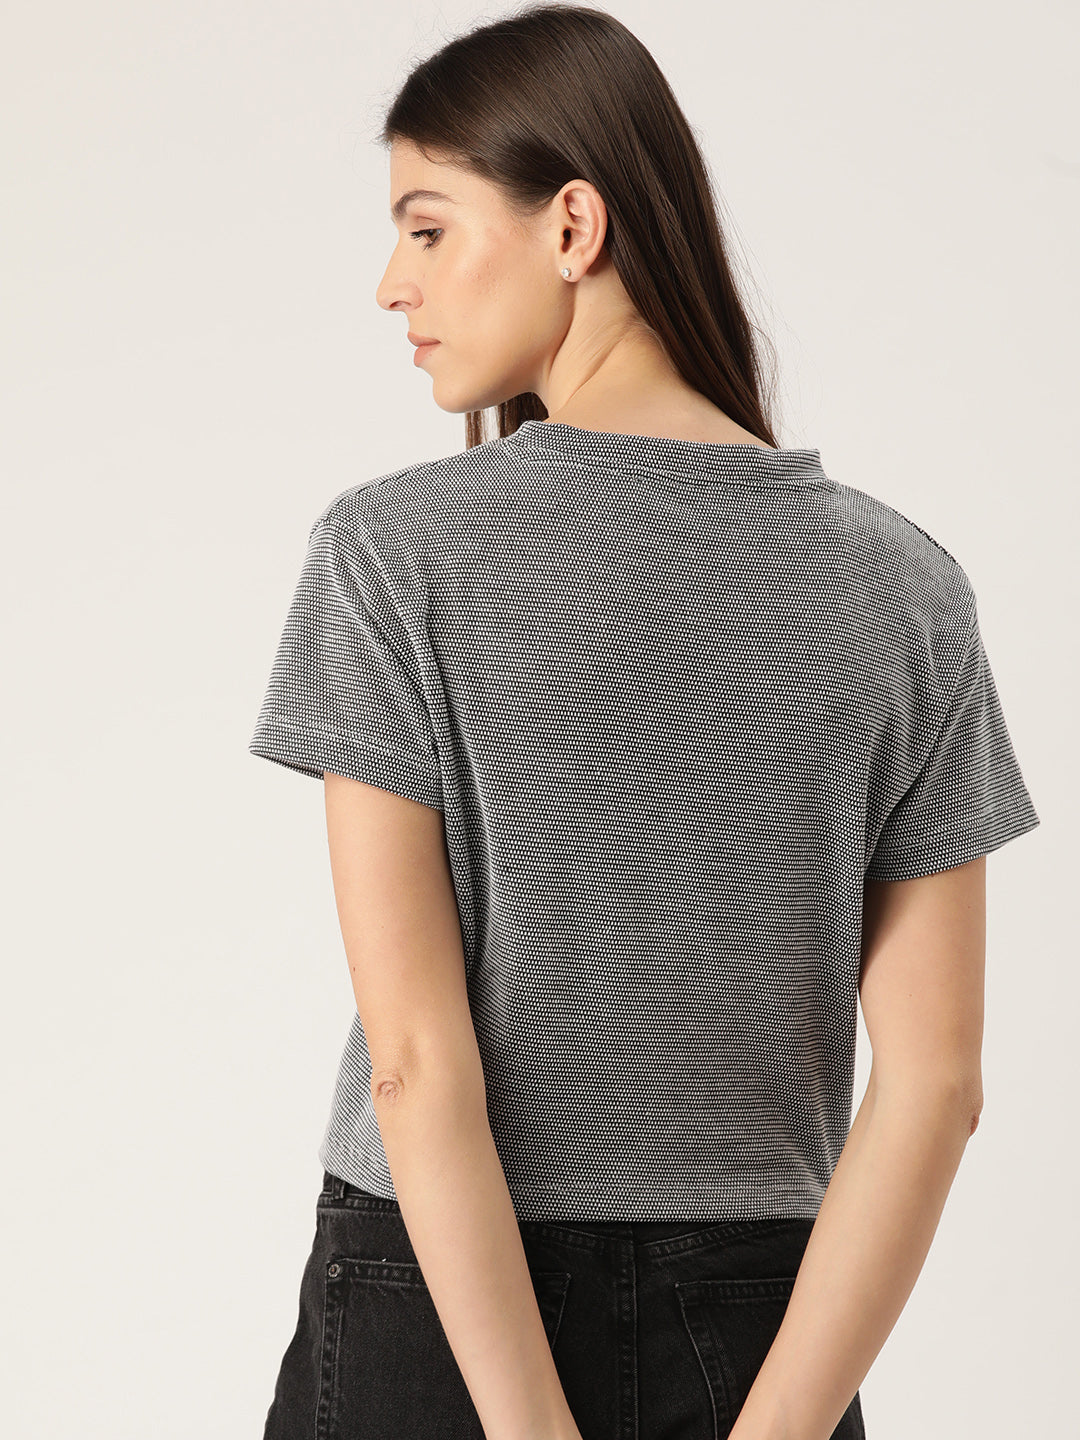 Women Charcoal Grey & White Self-Design Crop Top